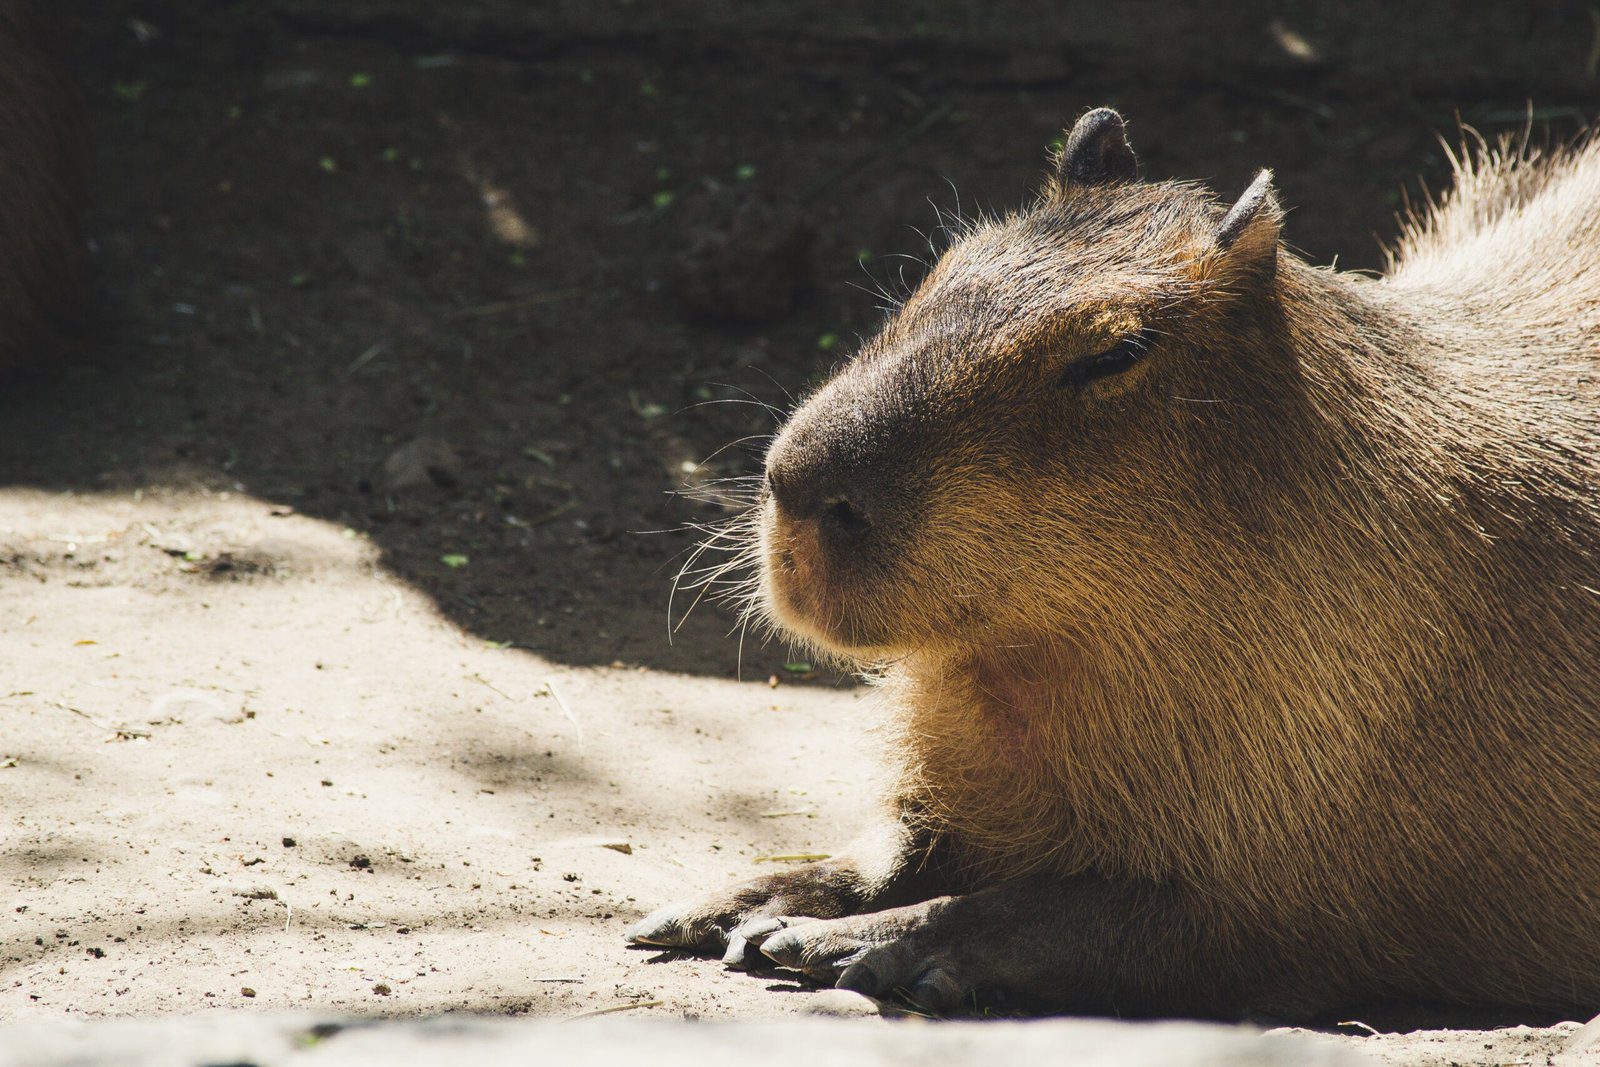 A Detailed Drawing of a Capybara